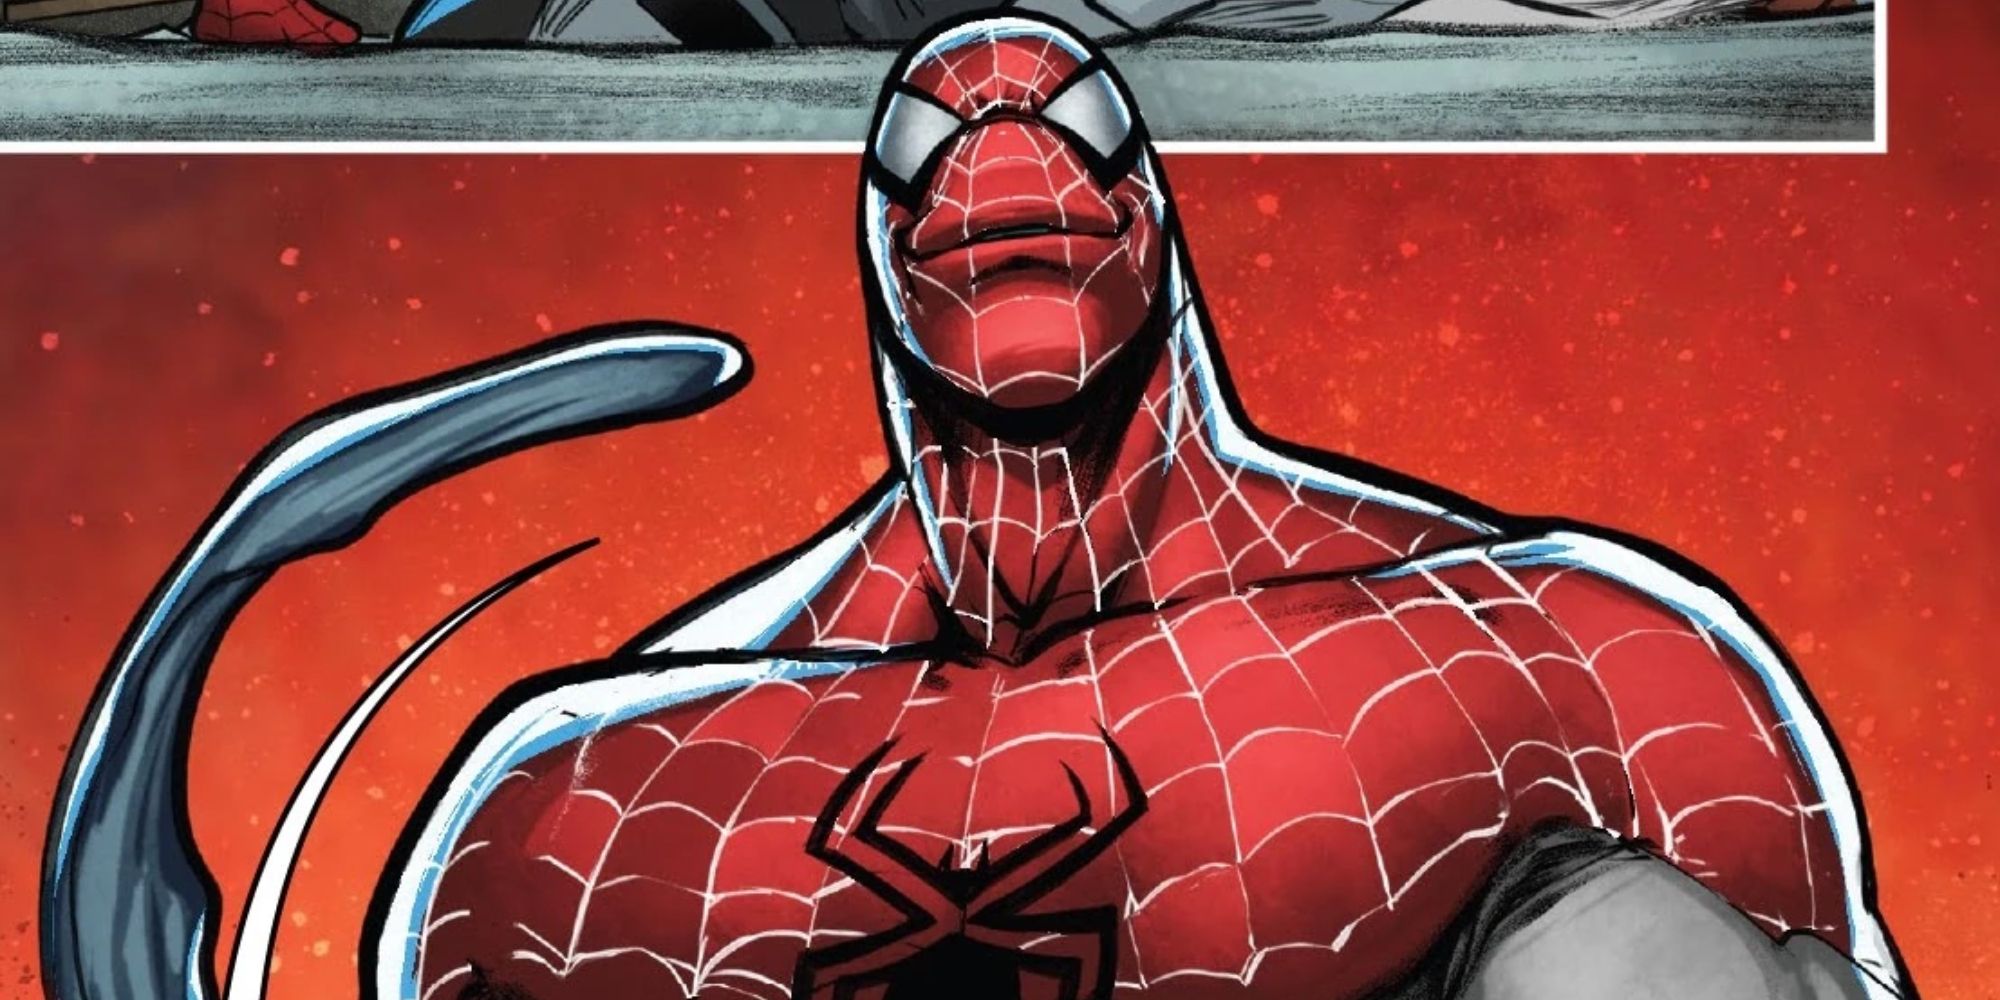 Spidercide in a comic book